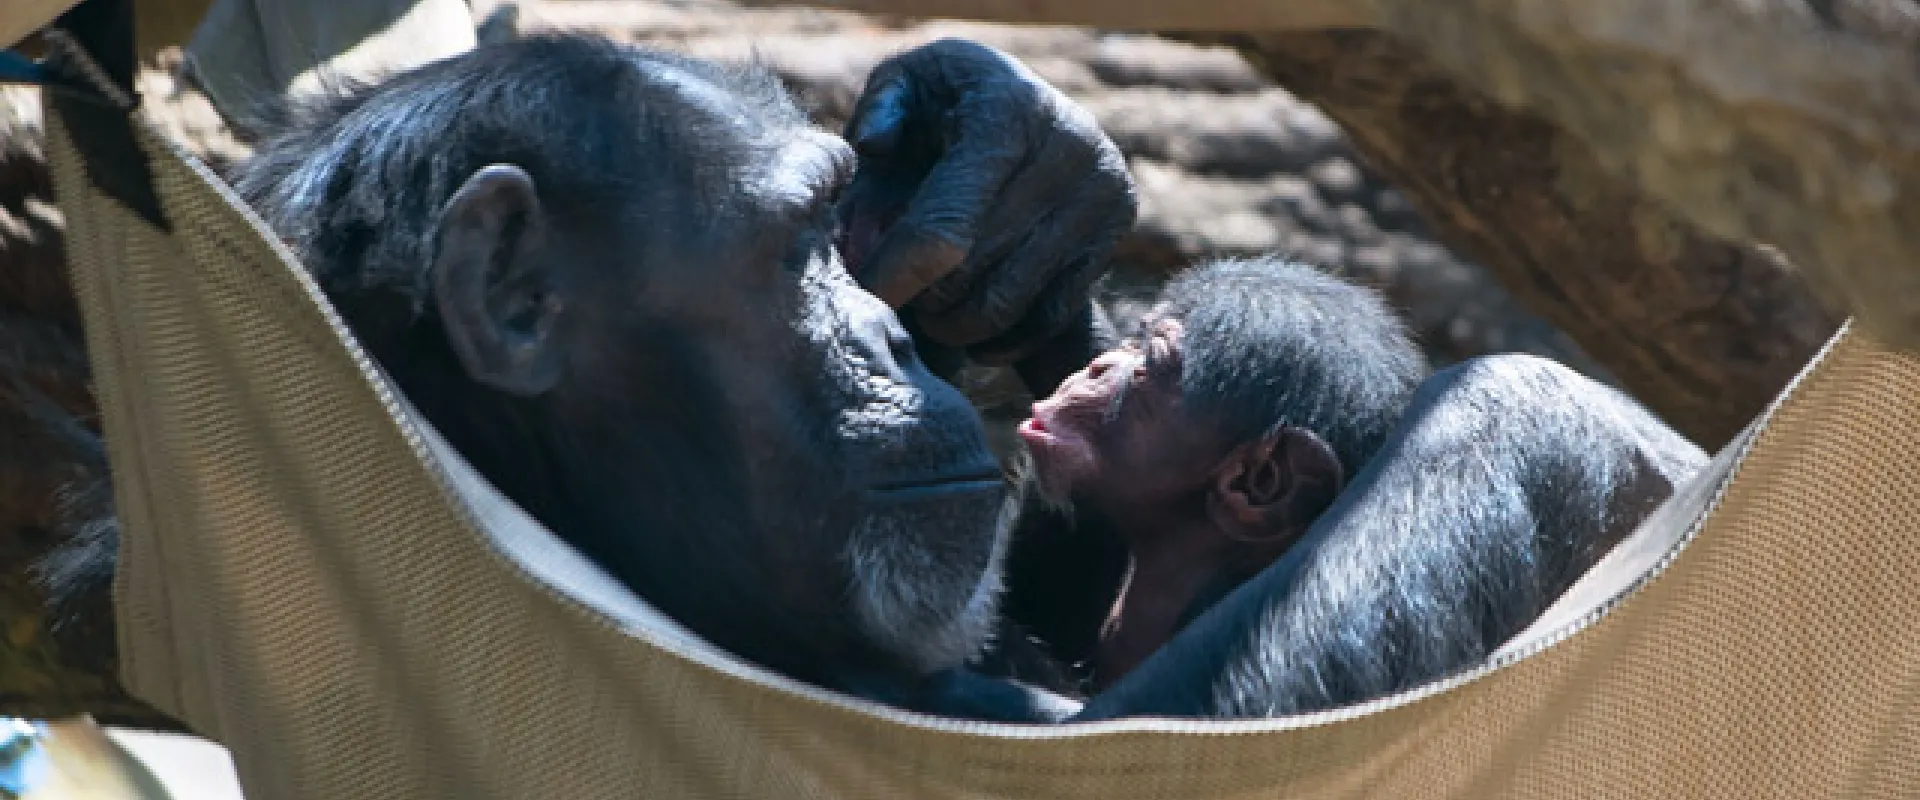 North Carolina Zoo Announces Baby Chimp's Name